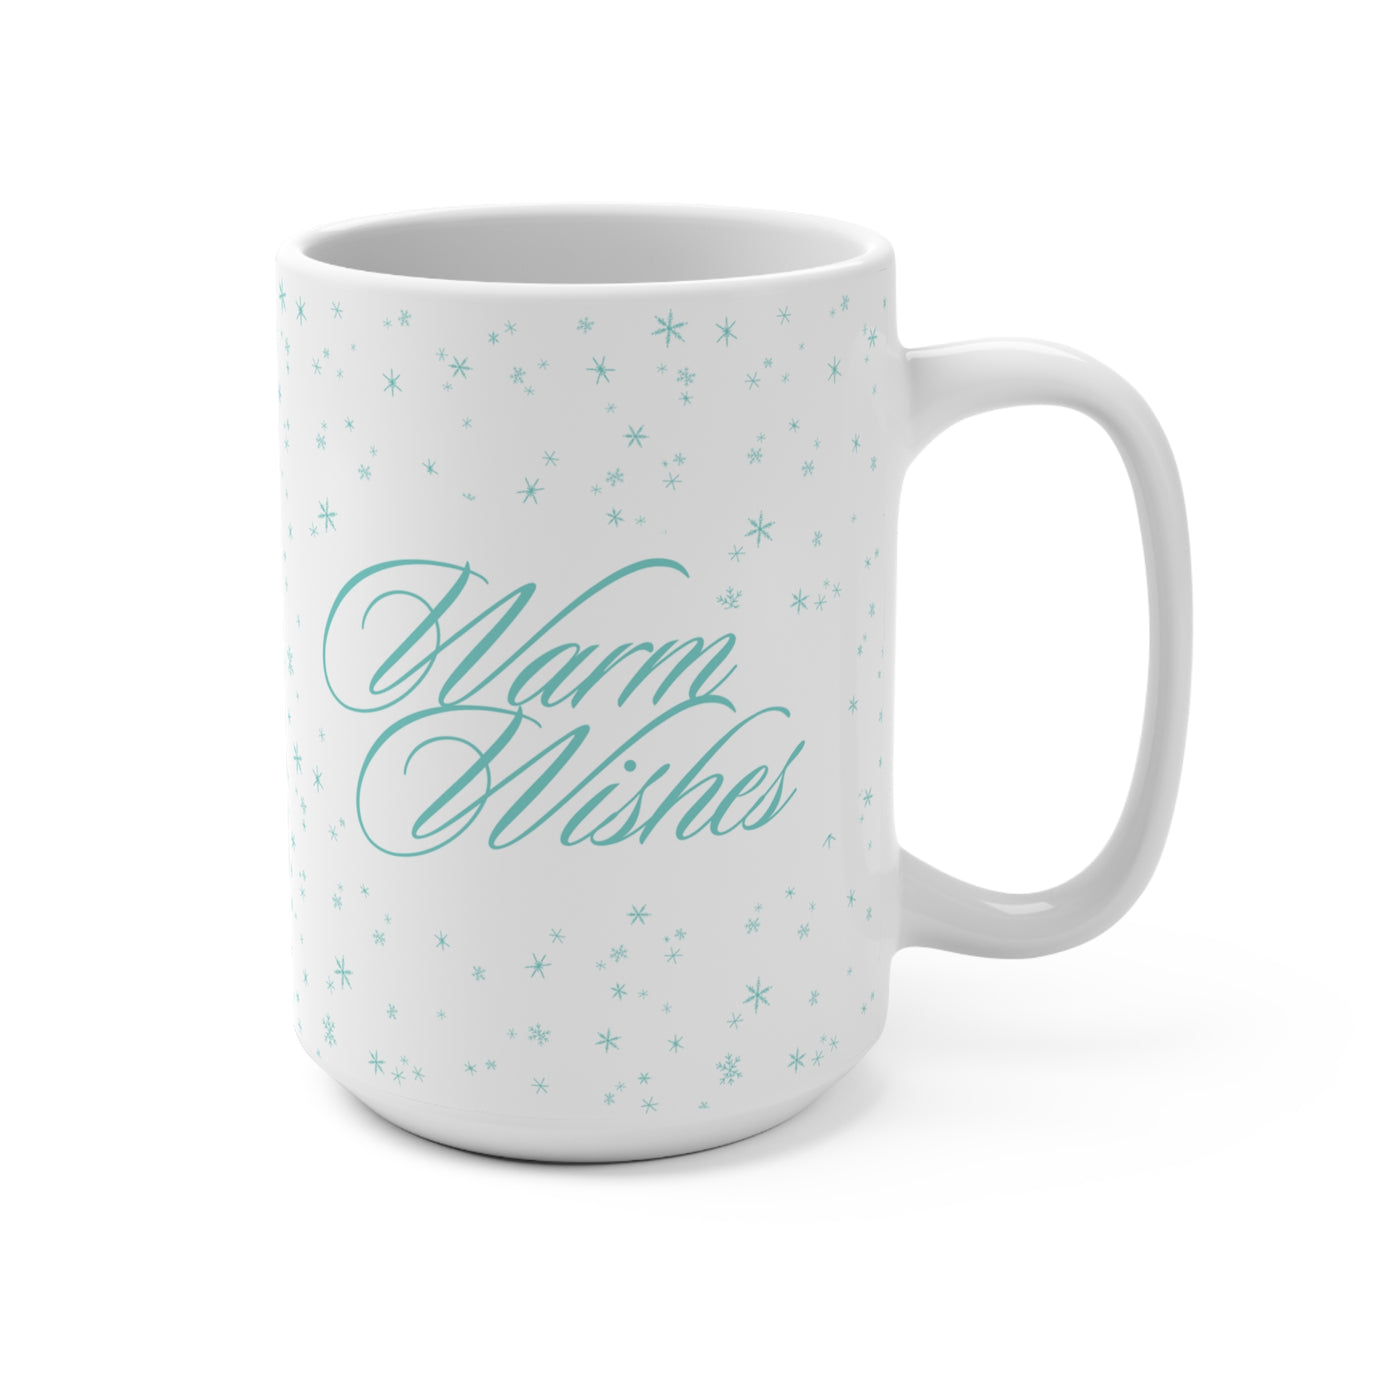 Warm Wishes White Ceramic Mug, 15oz